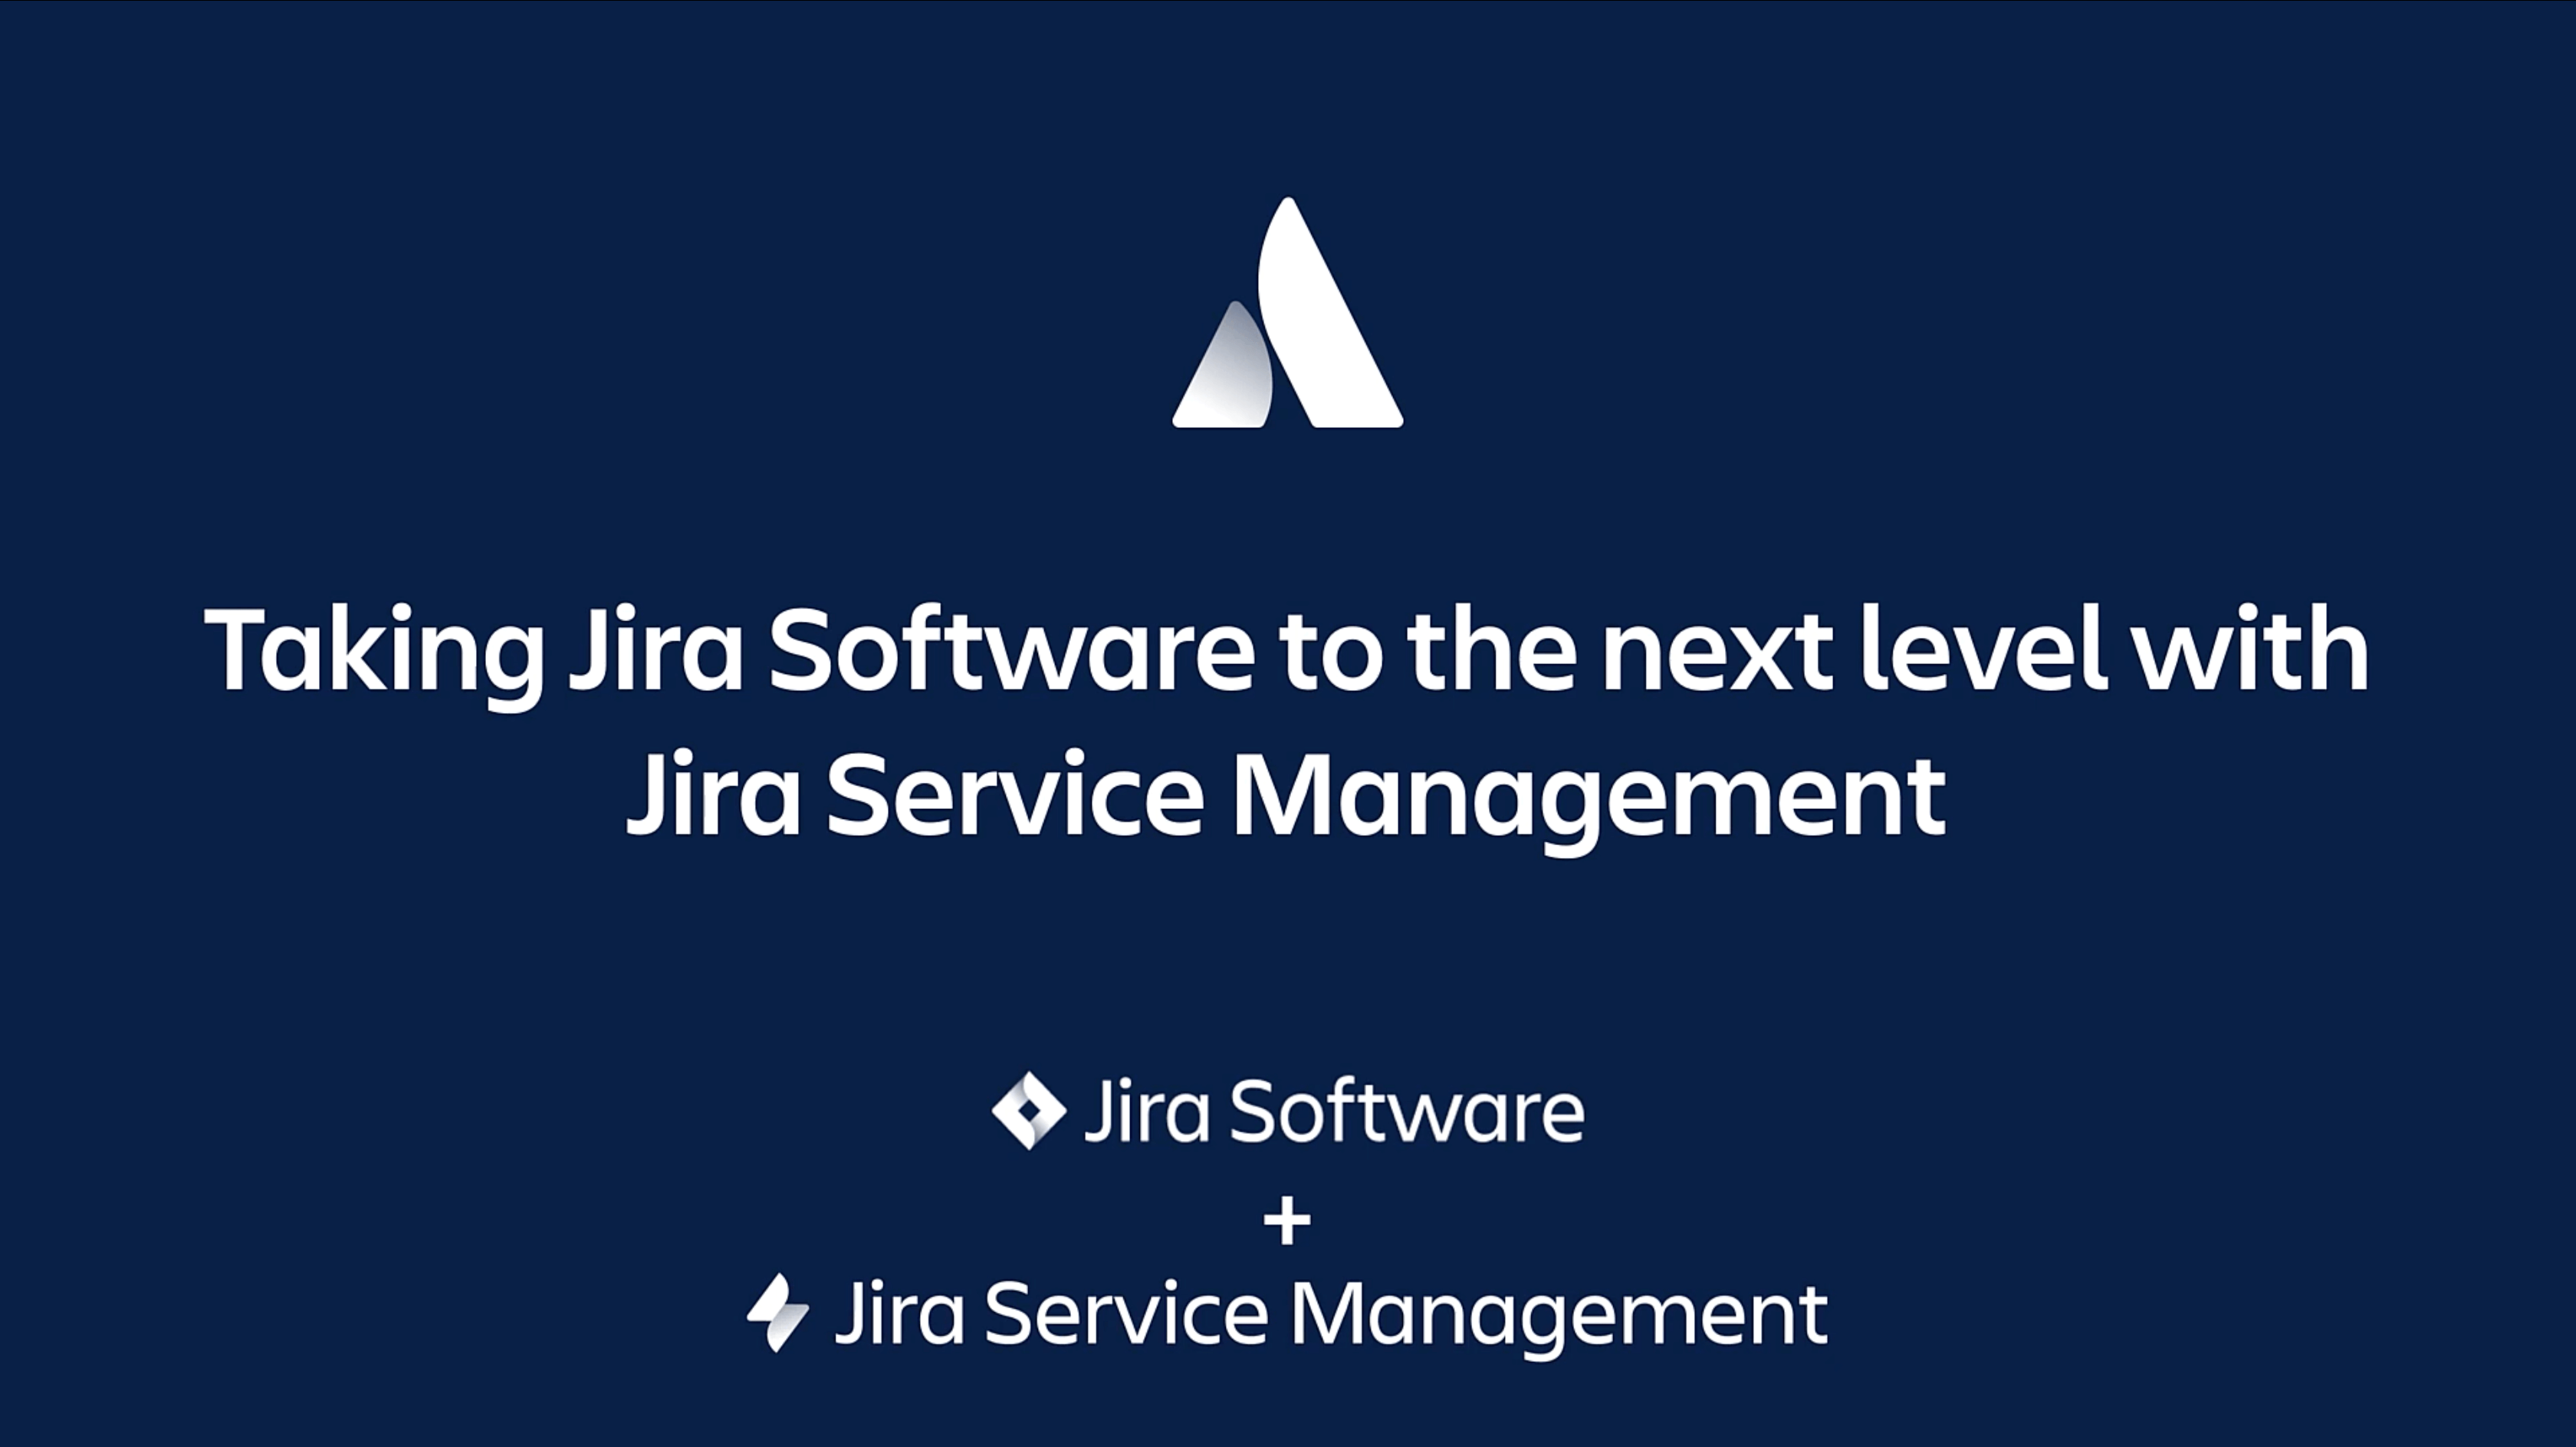 Til Jira Software naar een hoger niveau met Jira Service Management